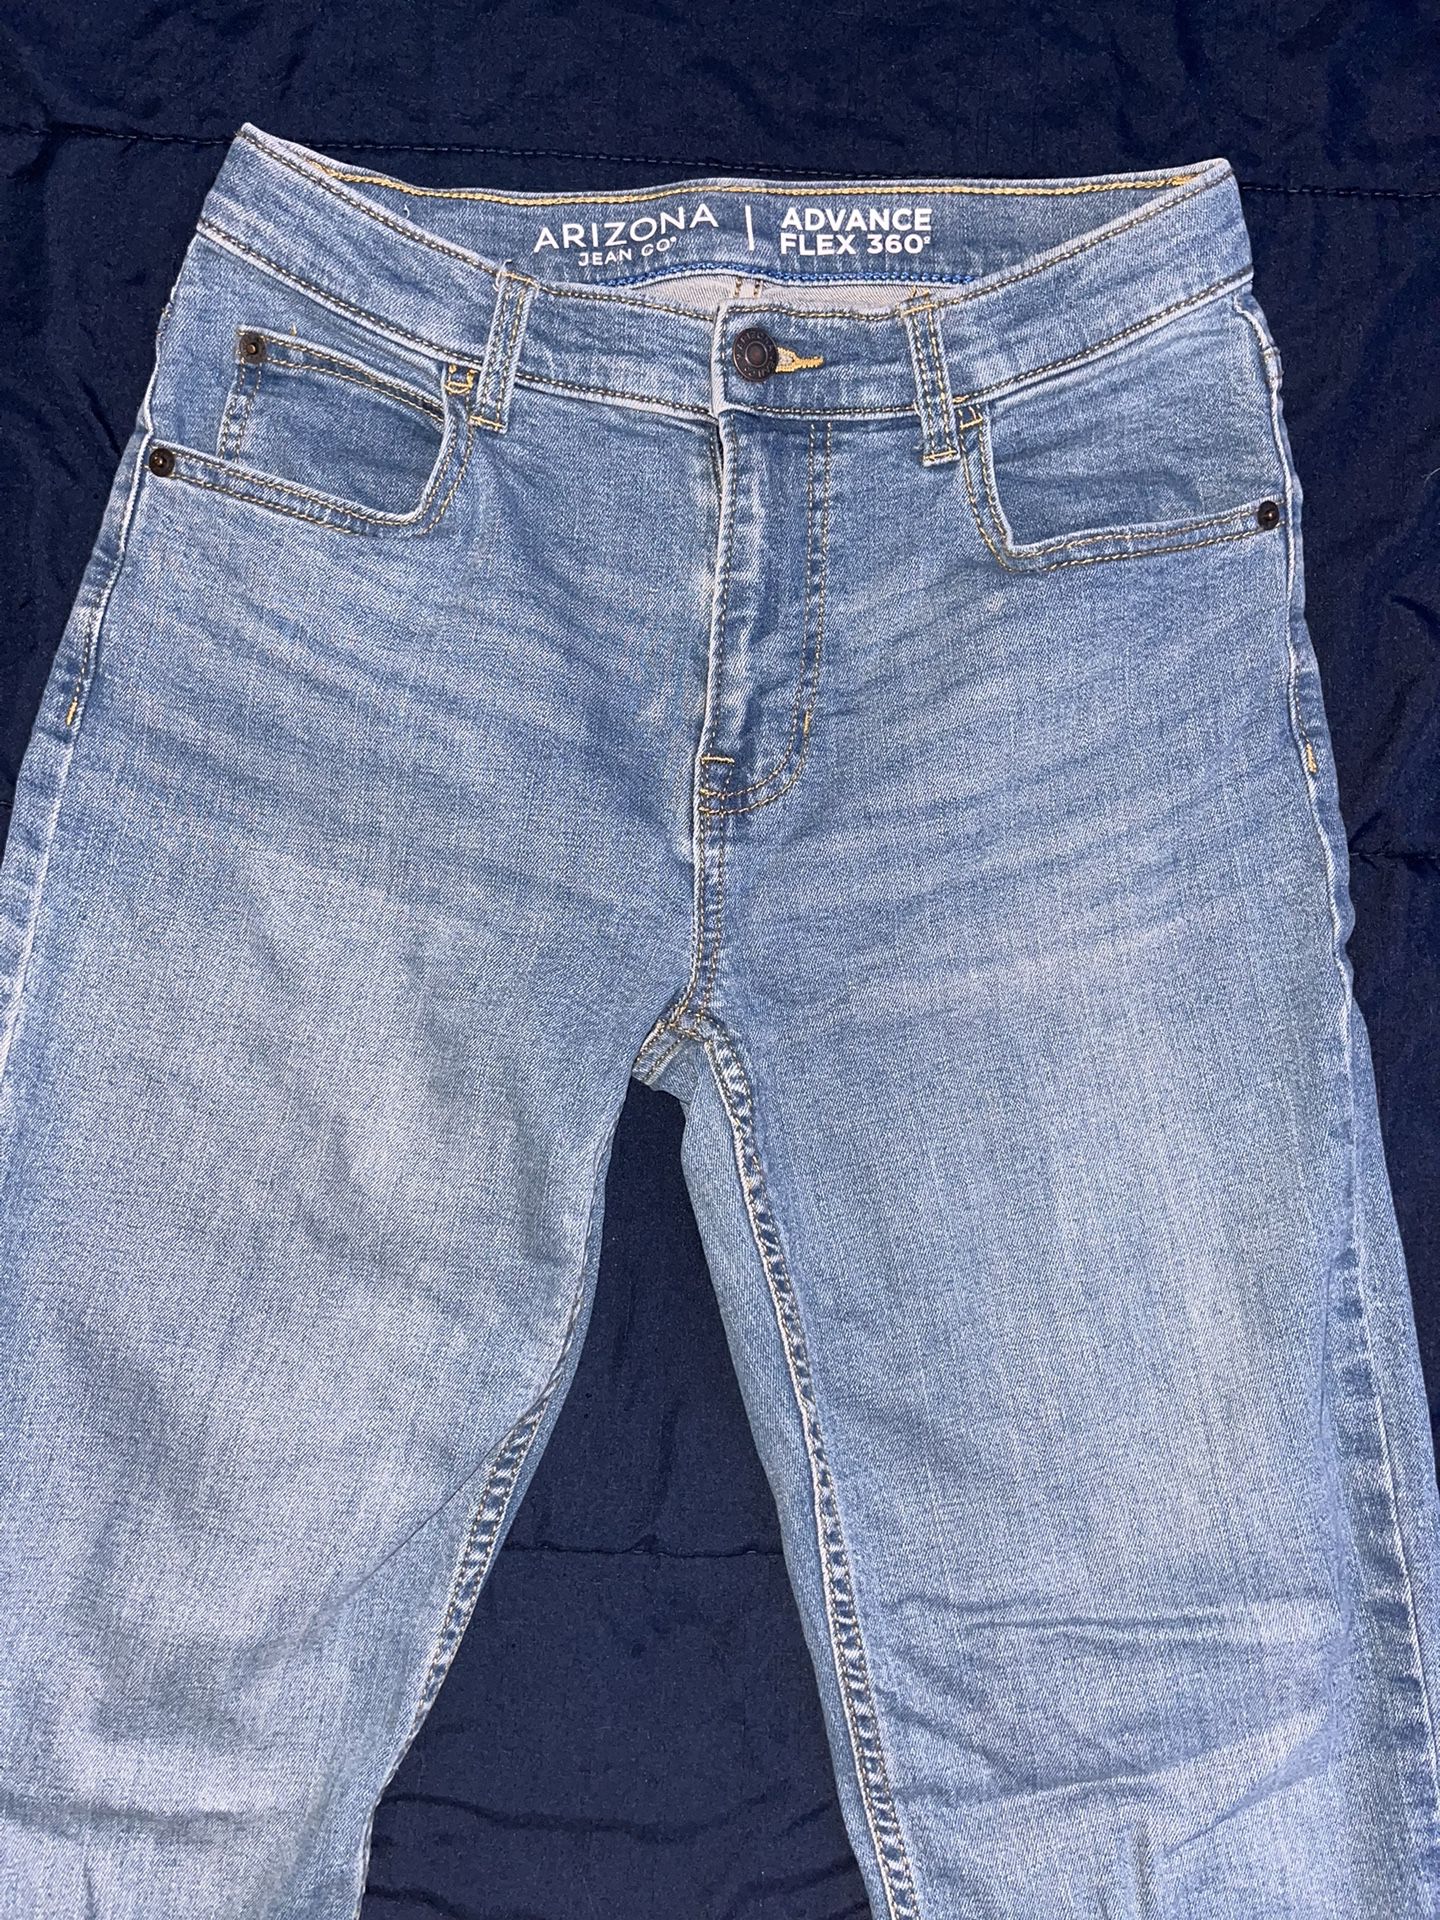 Size 18 Slim Arizona Pants for Sale in El Paso, TX - OfferUp